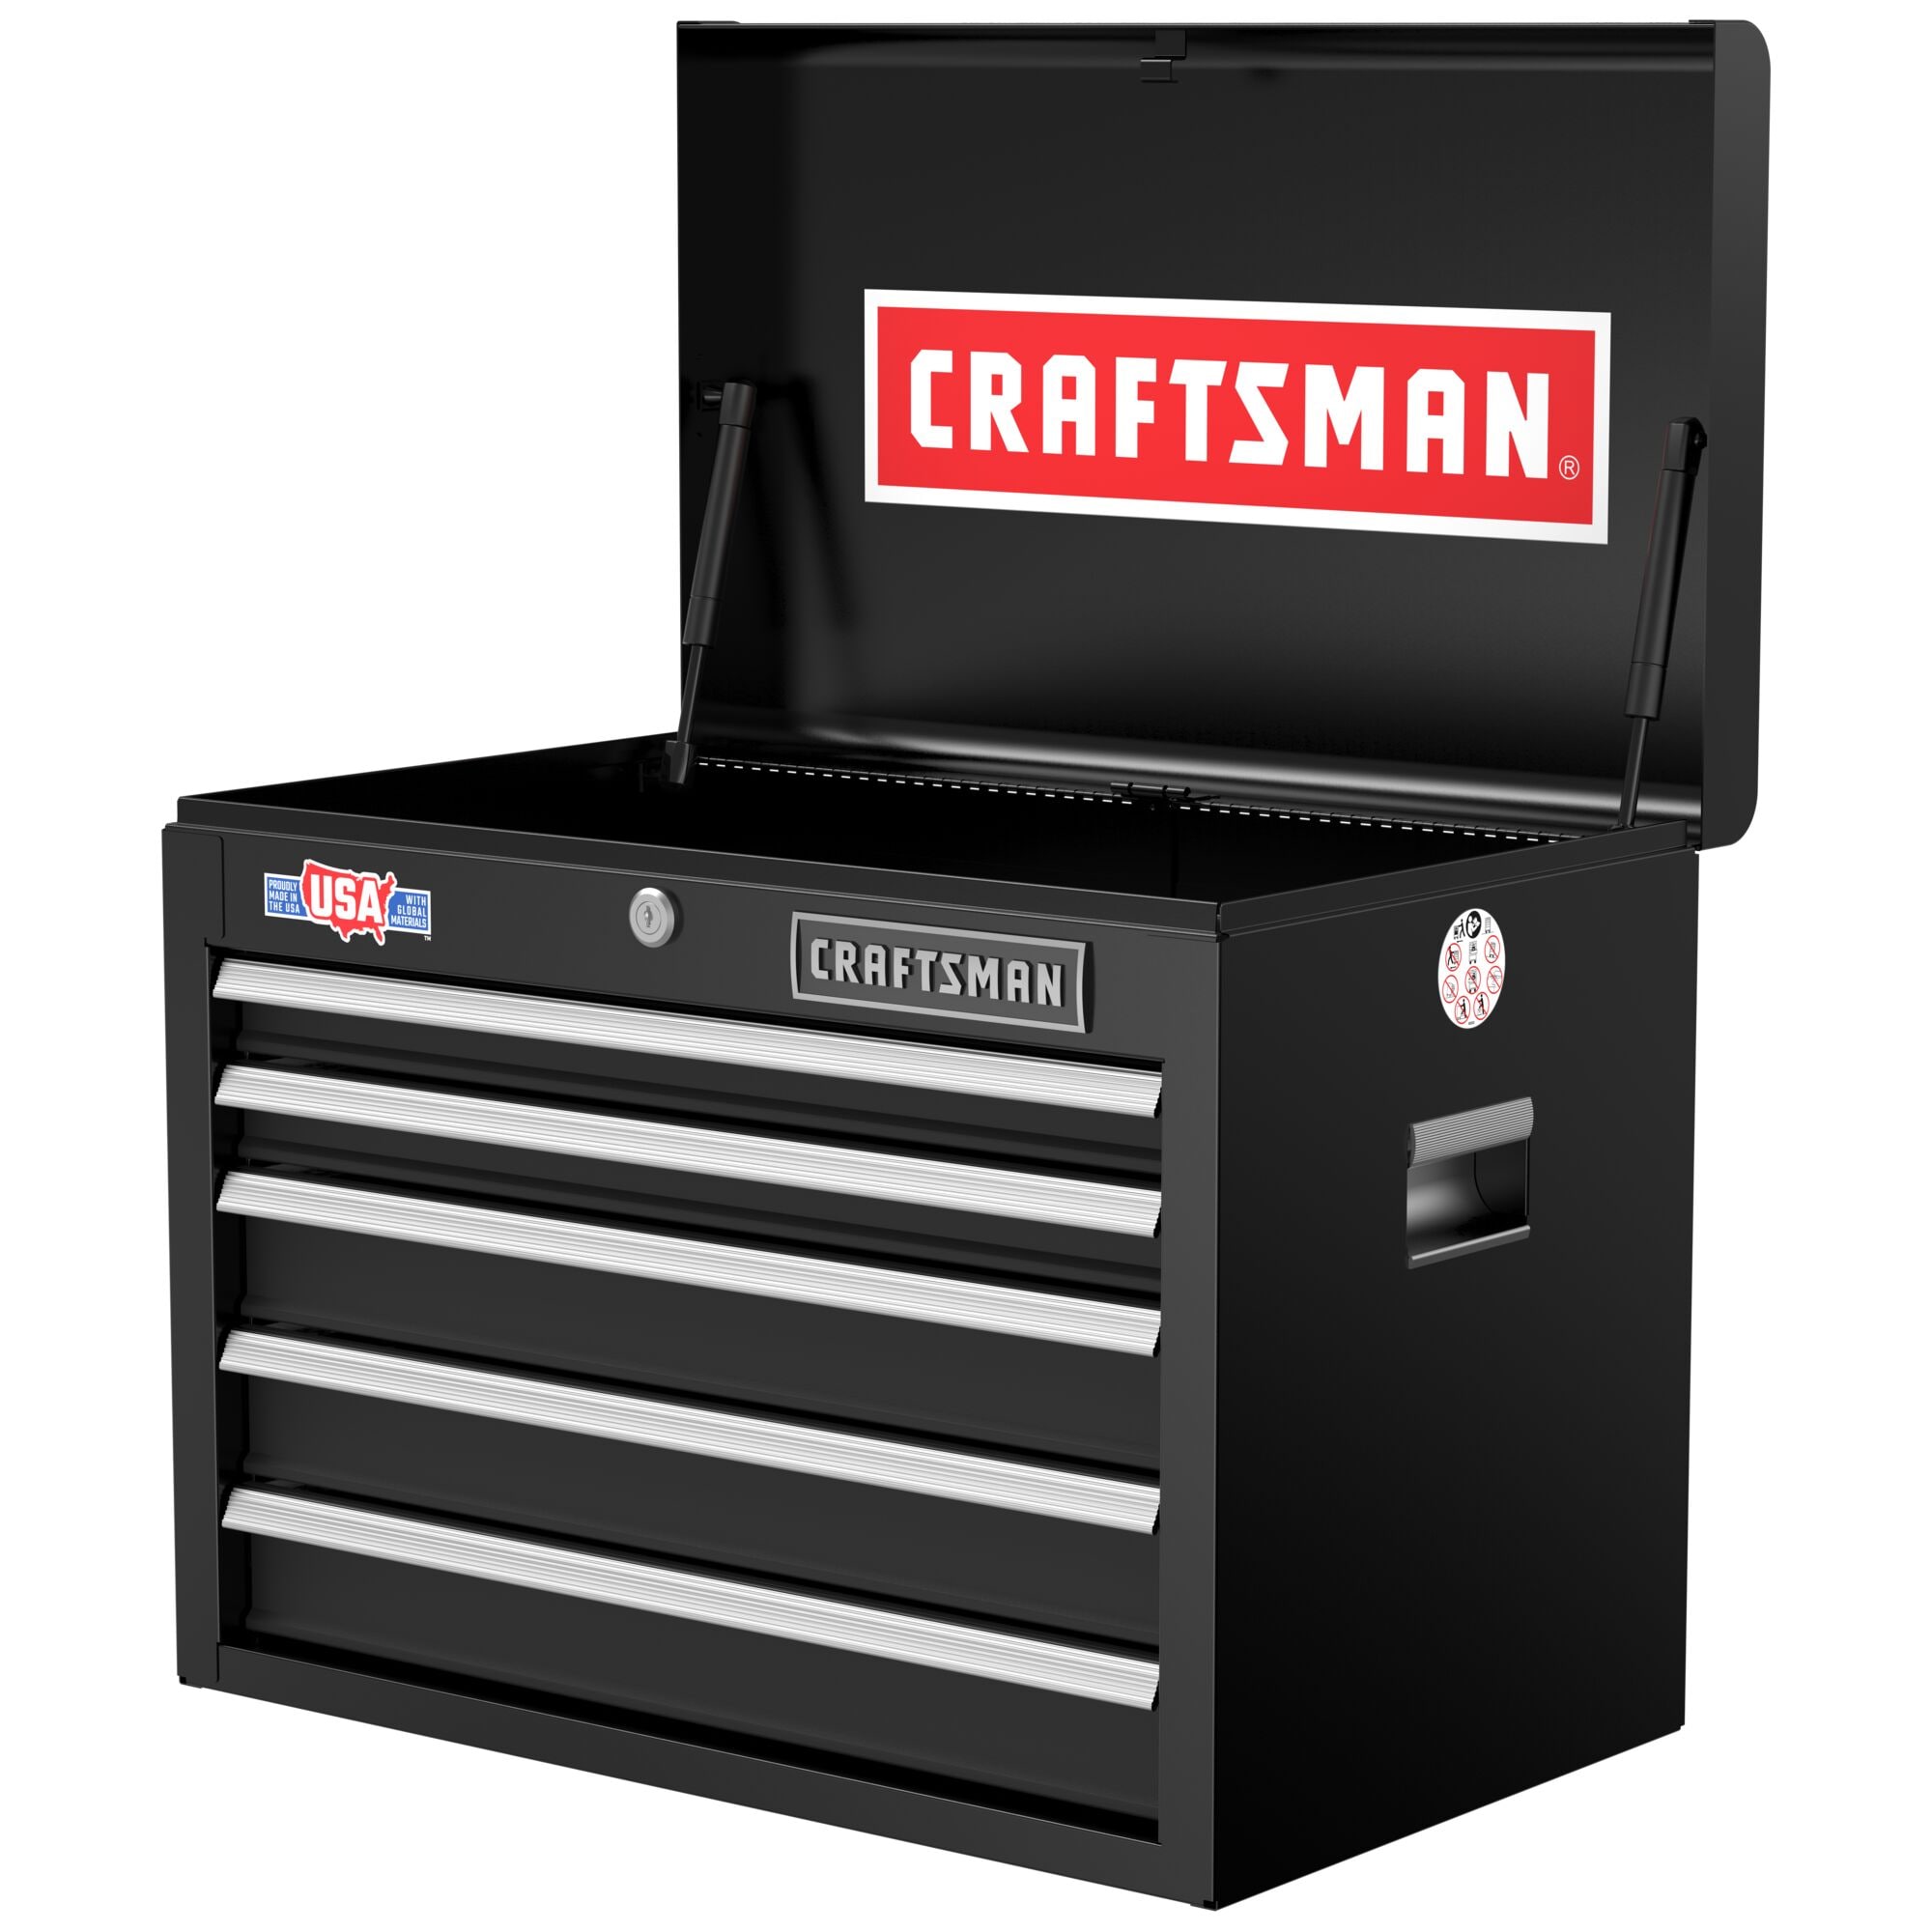 File:Craftsman tool chest.jpg - Wikipedia